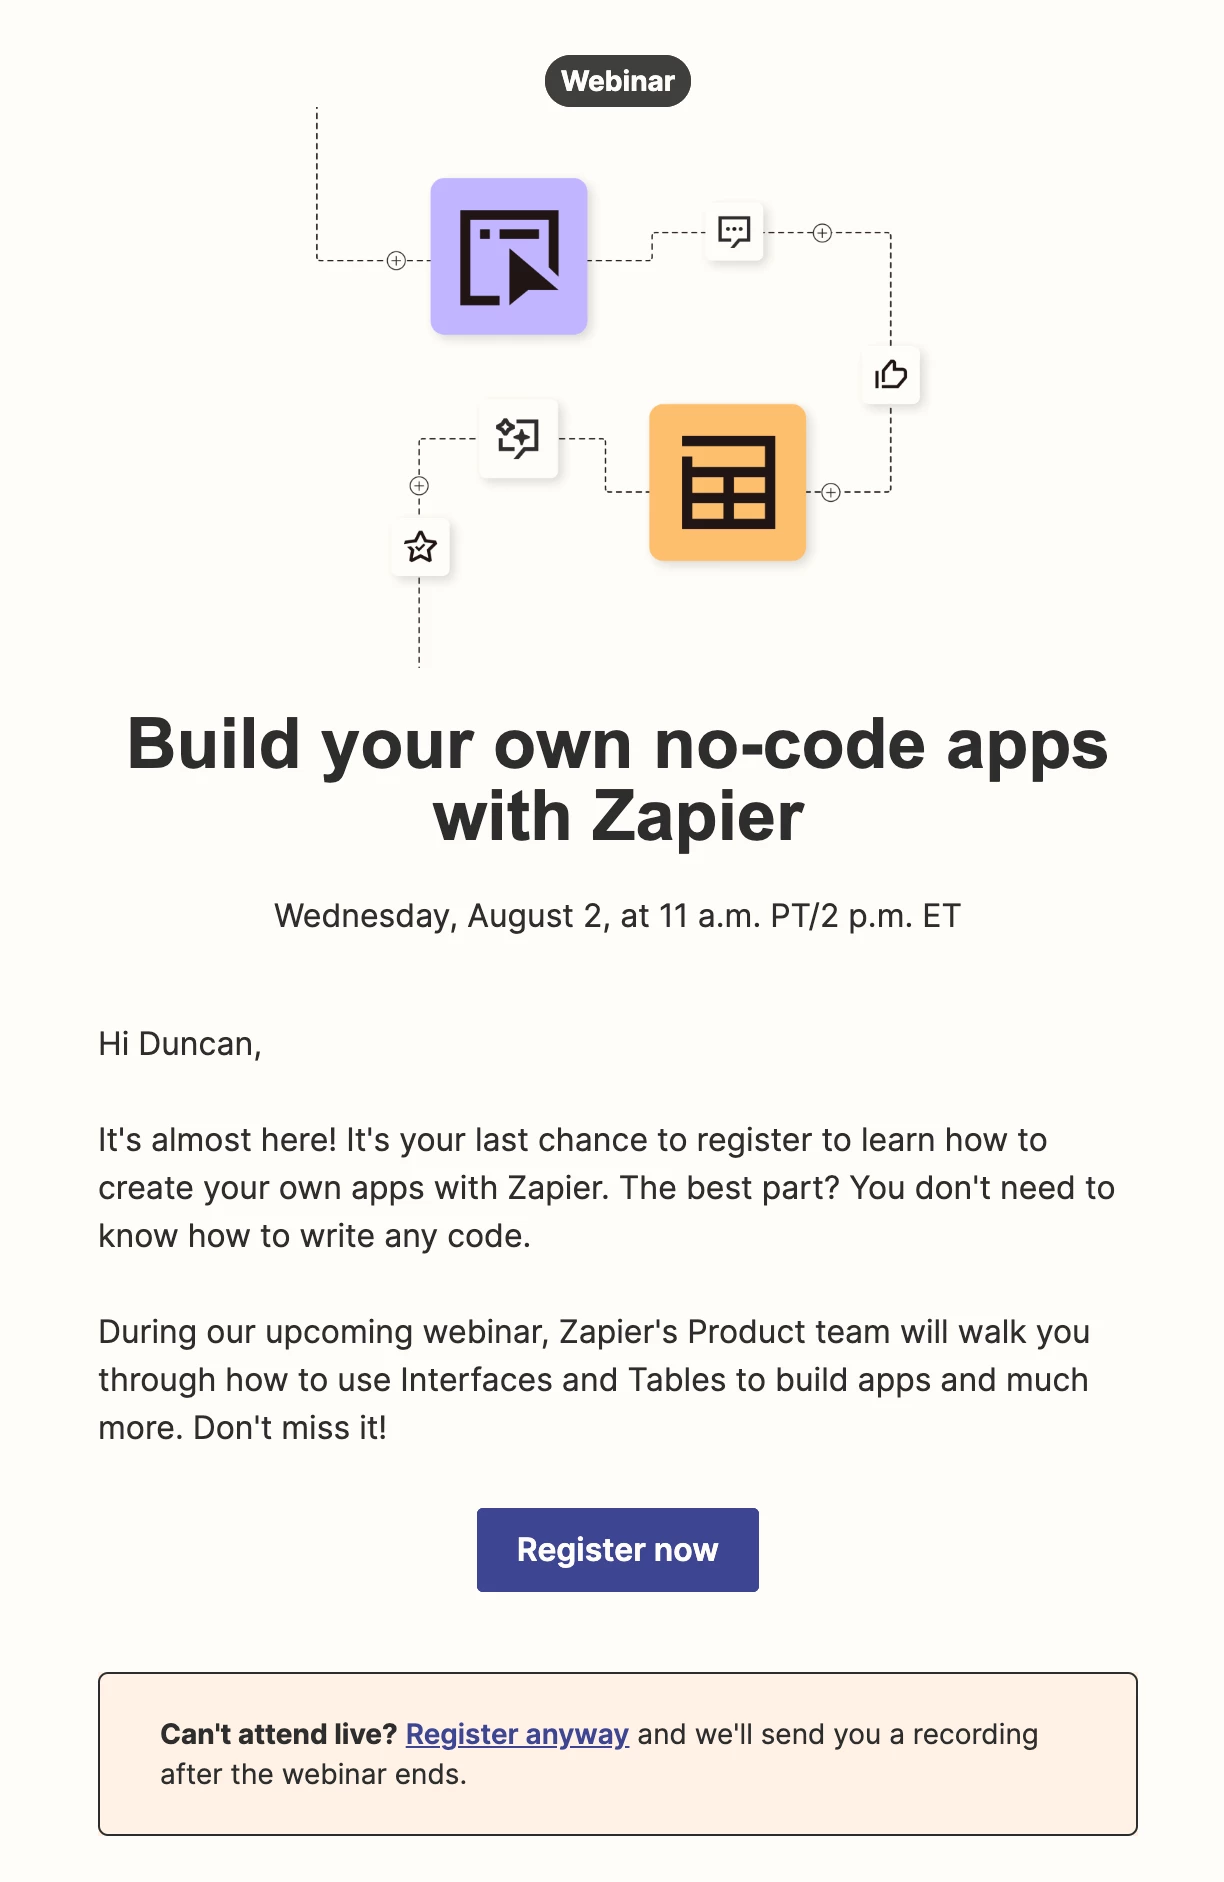 Zapier email promoting a webinar